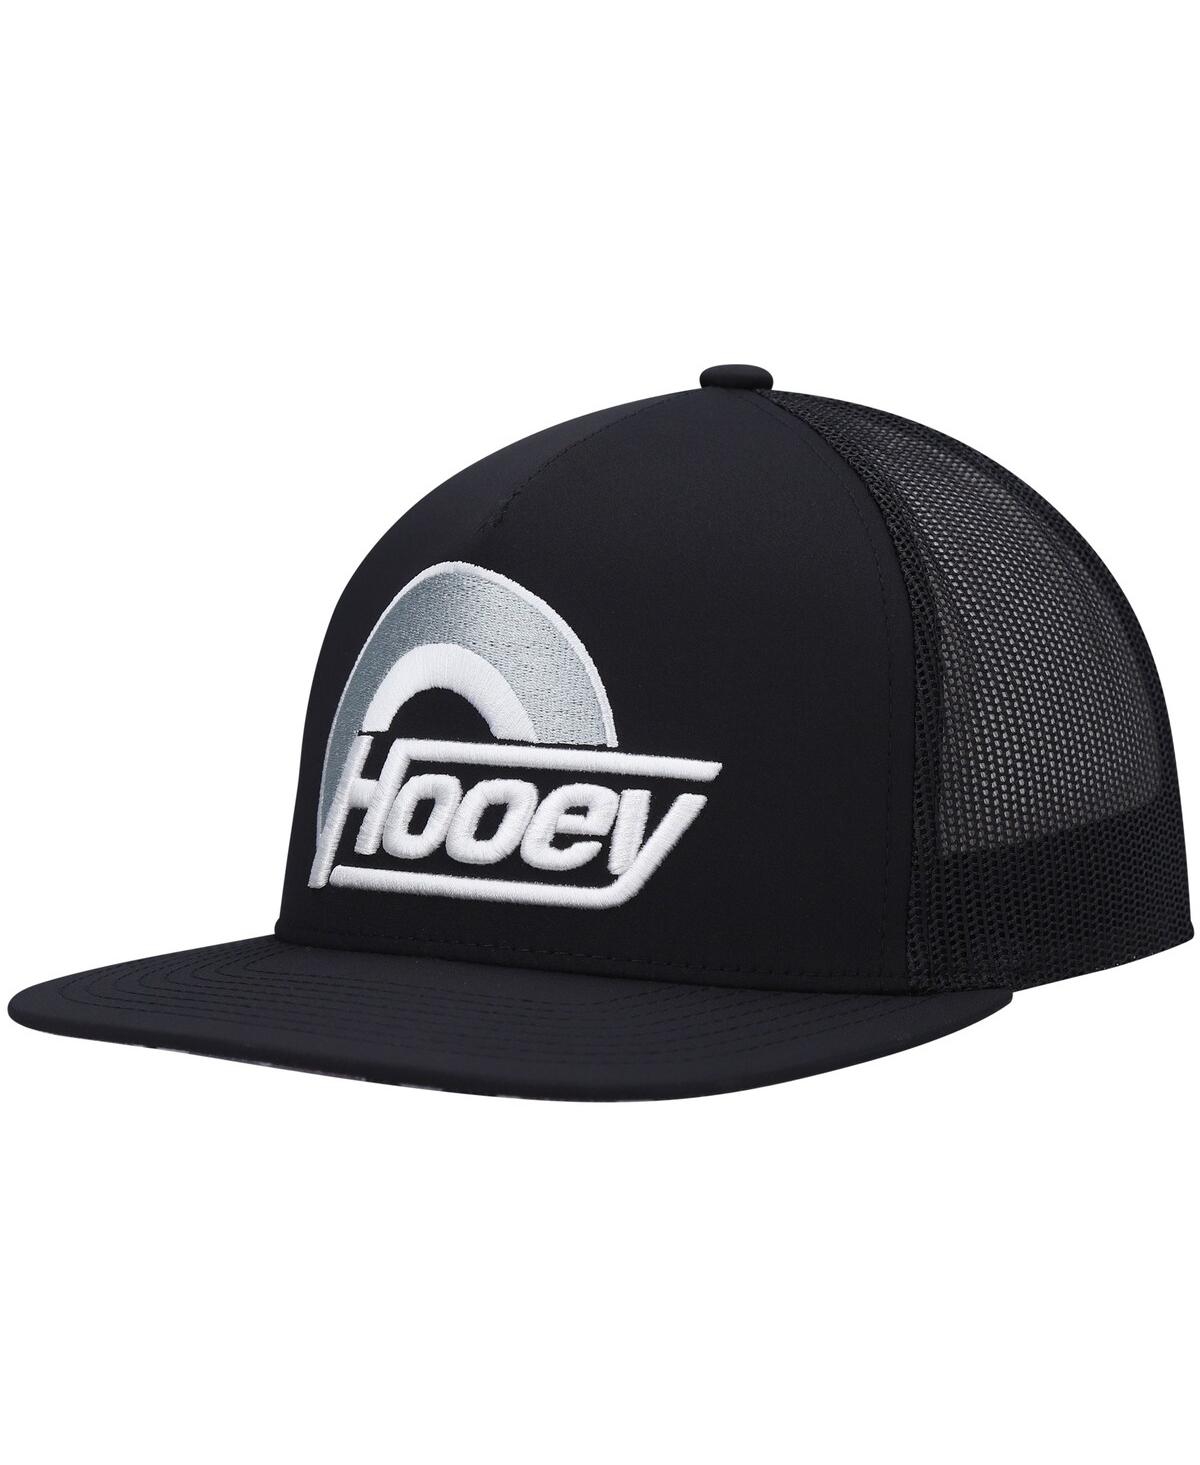 Men's Hooey Black Suds Trucker Snapback Hat - Black